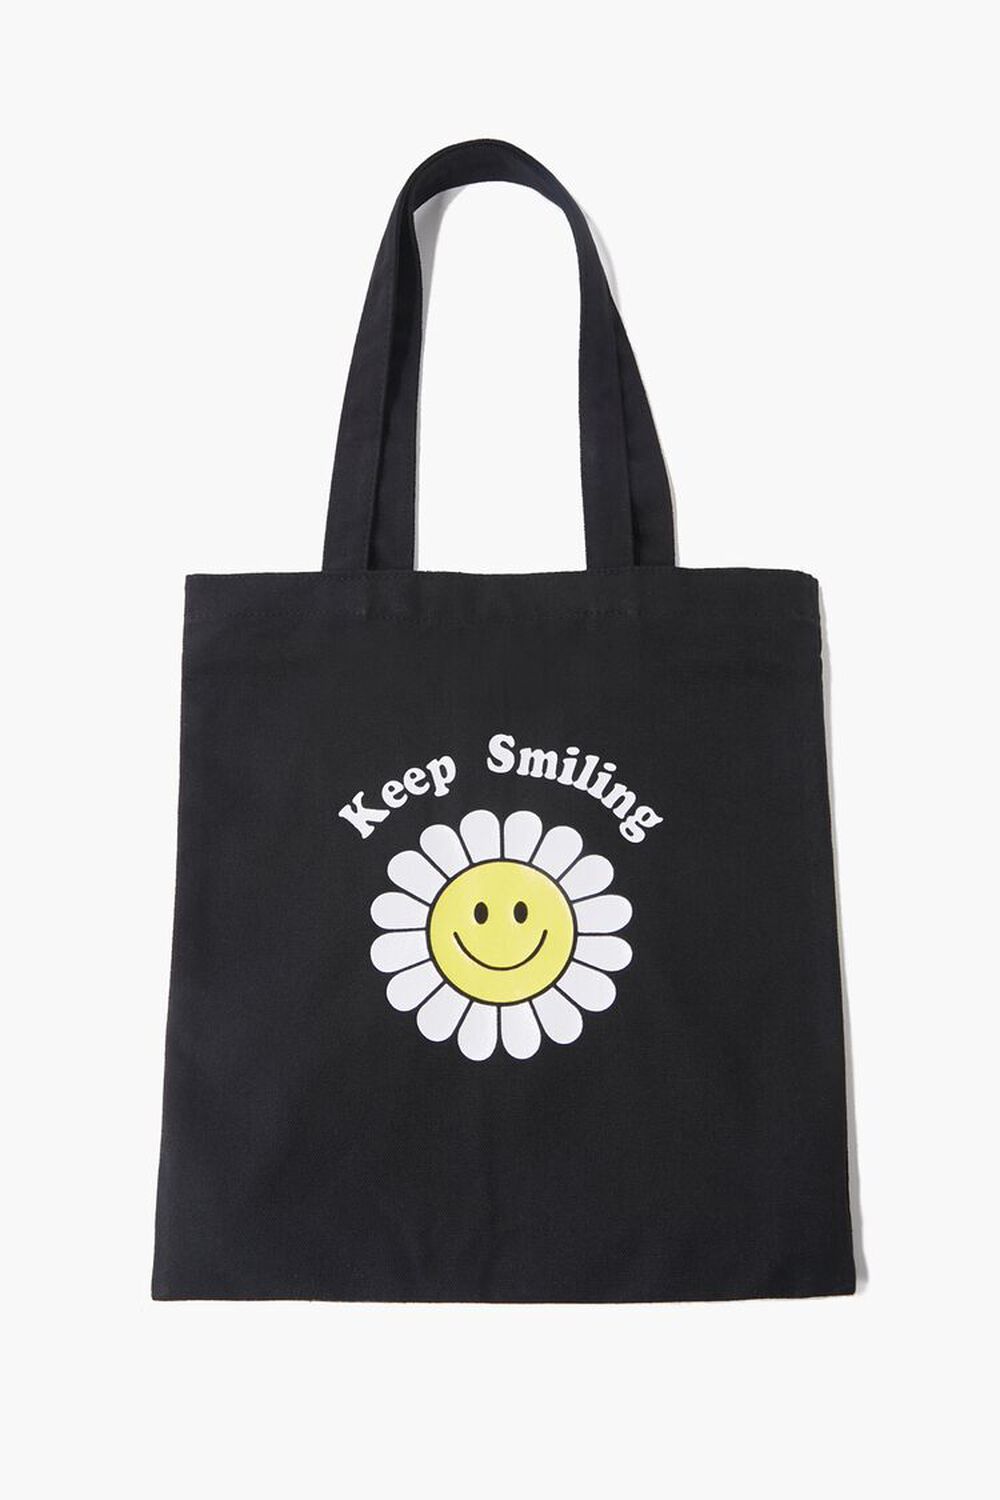 BLACK/MULTI Keep Smiling Graphic Tote Bag, image 1